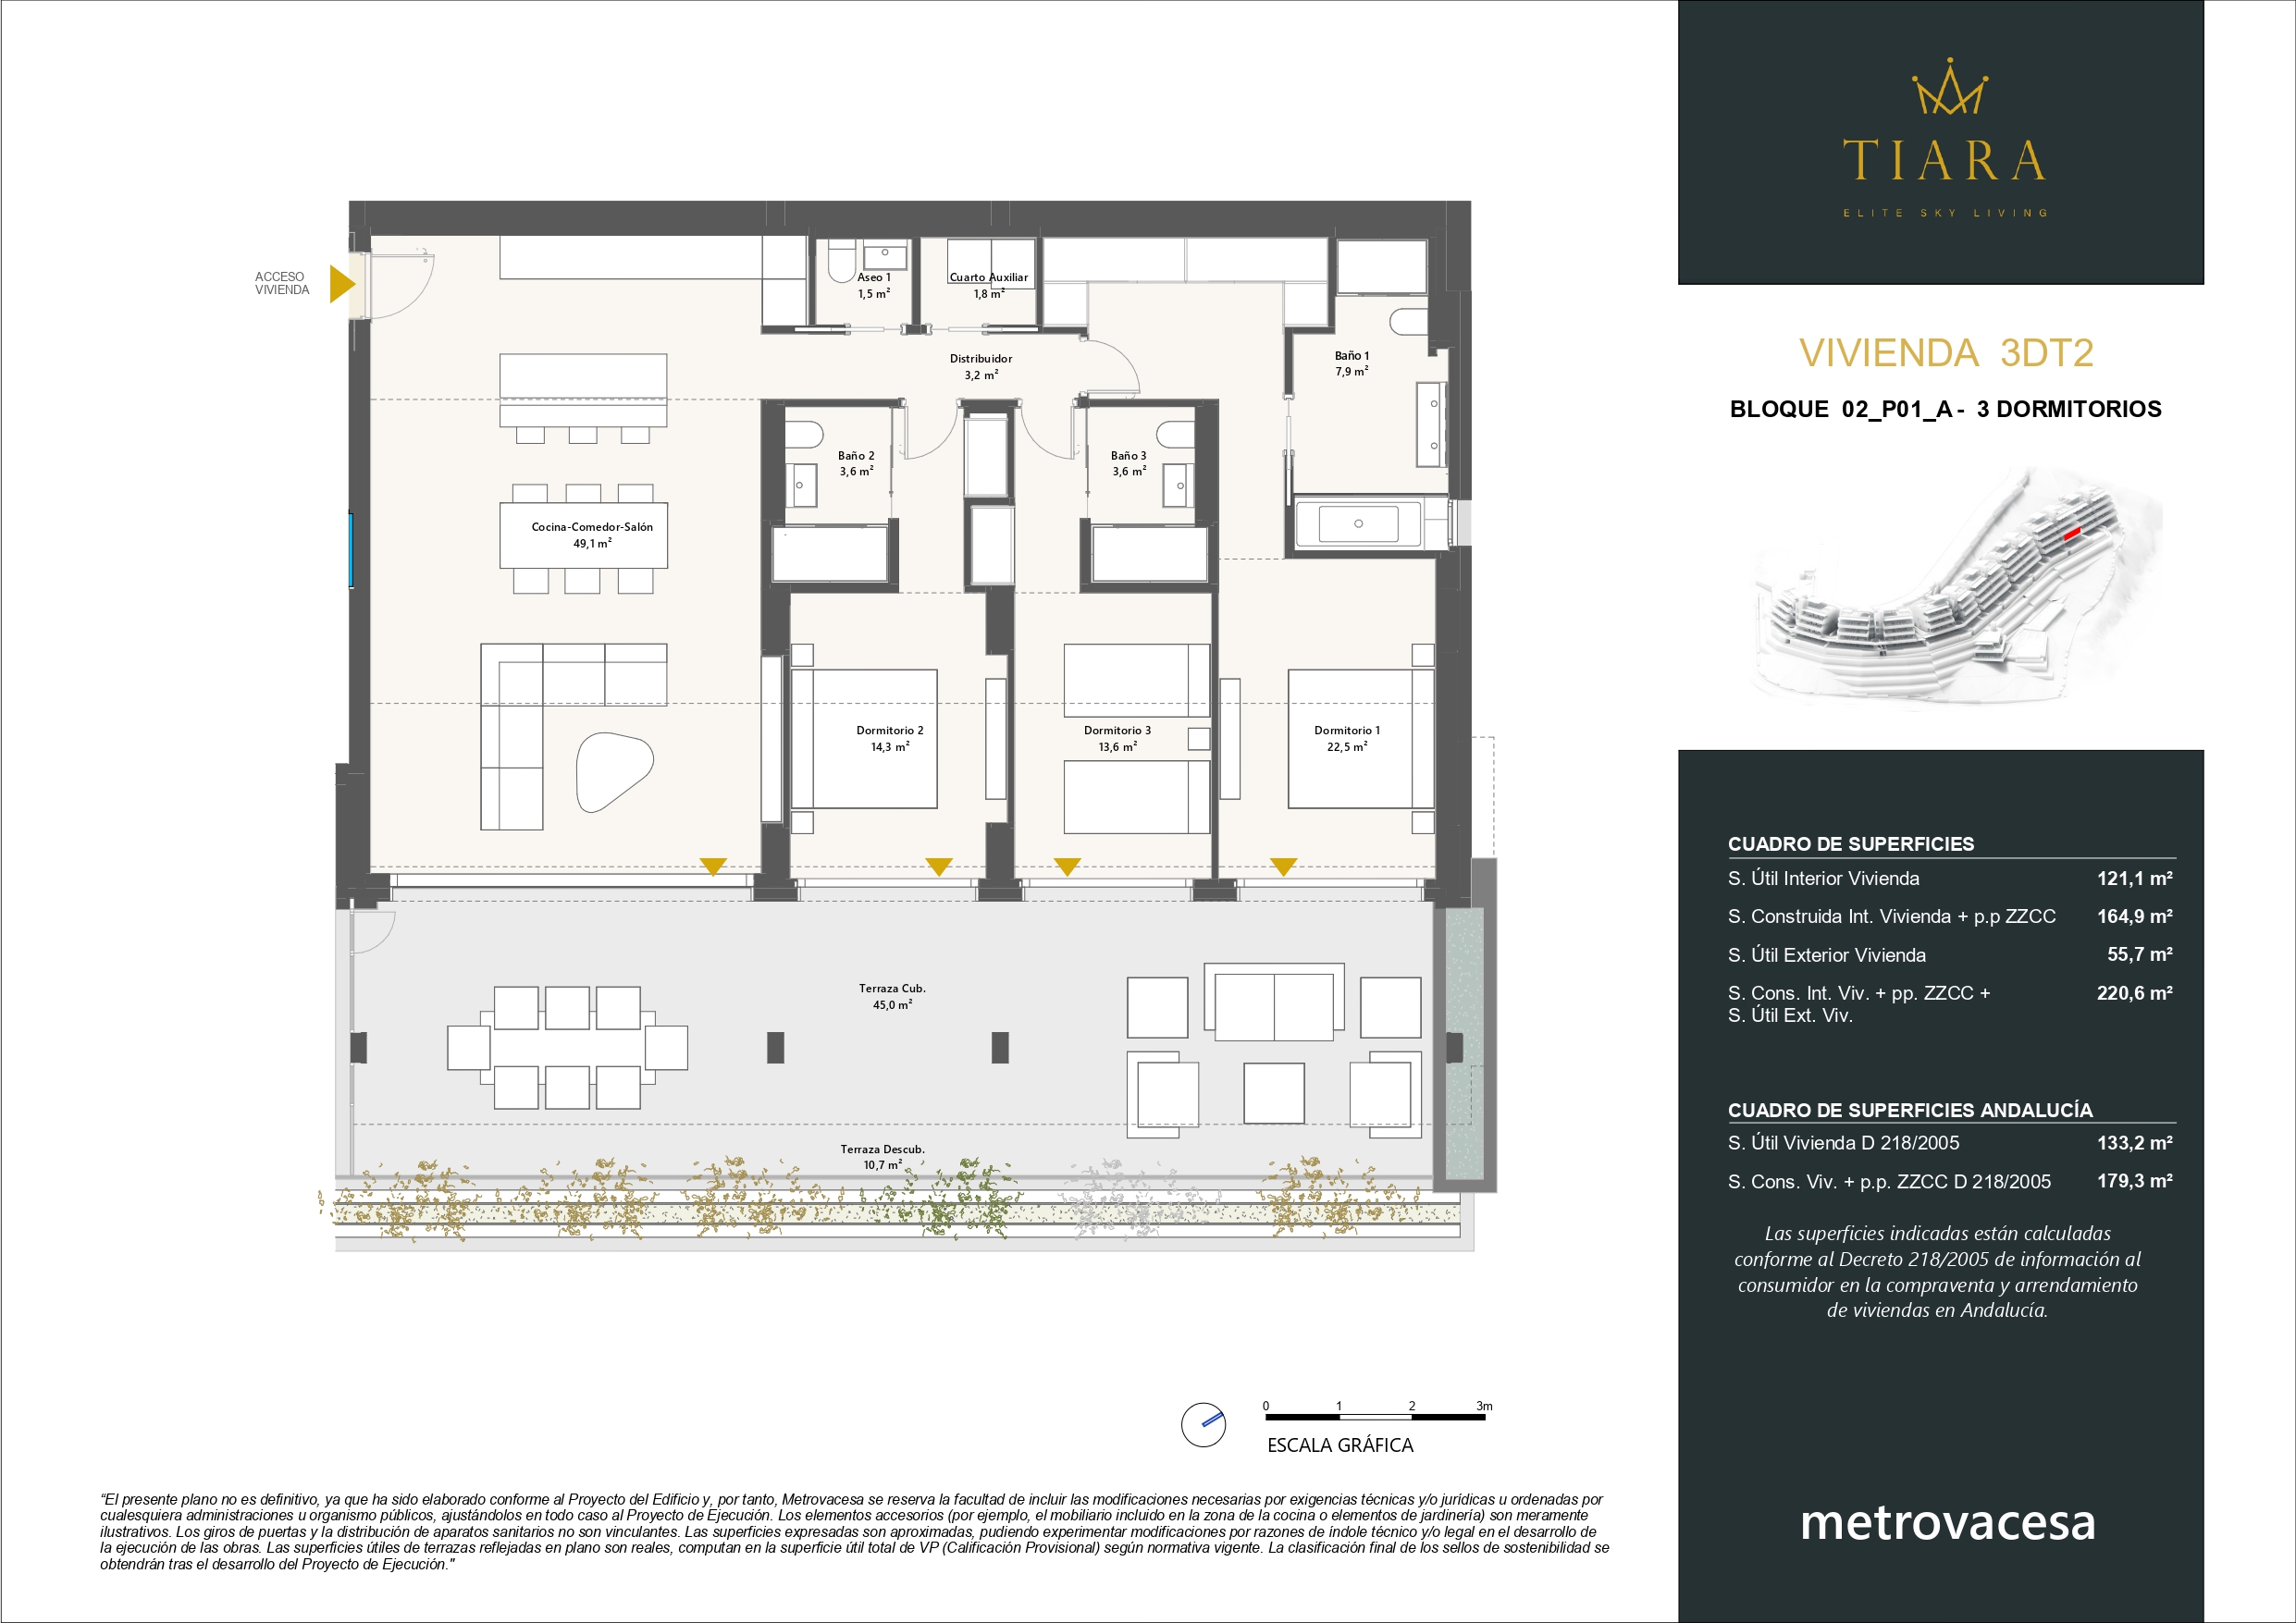 apartment for sale in tiara new development marbella